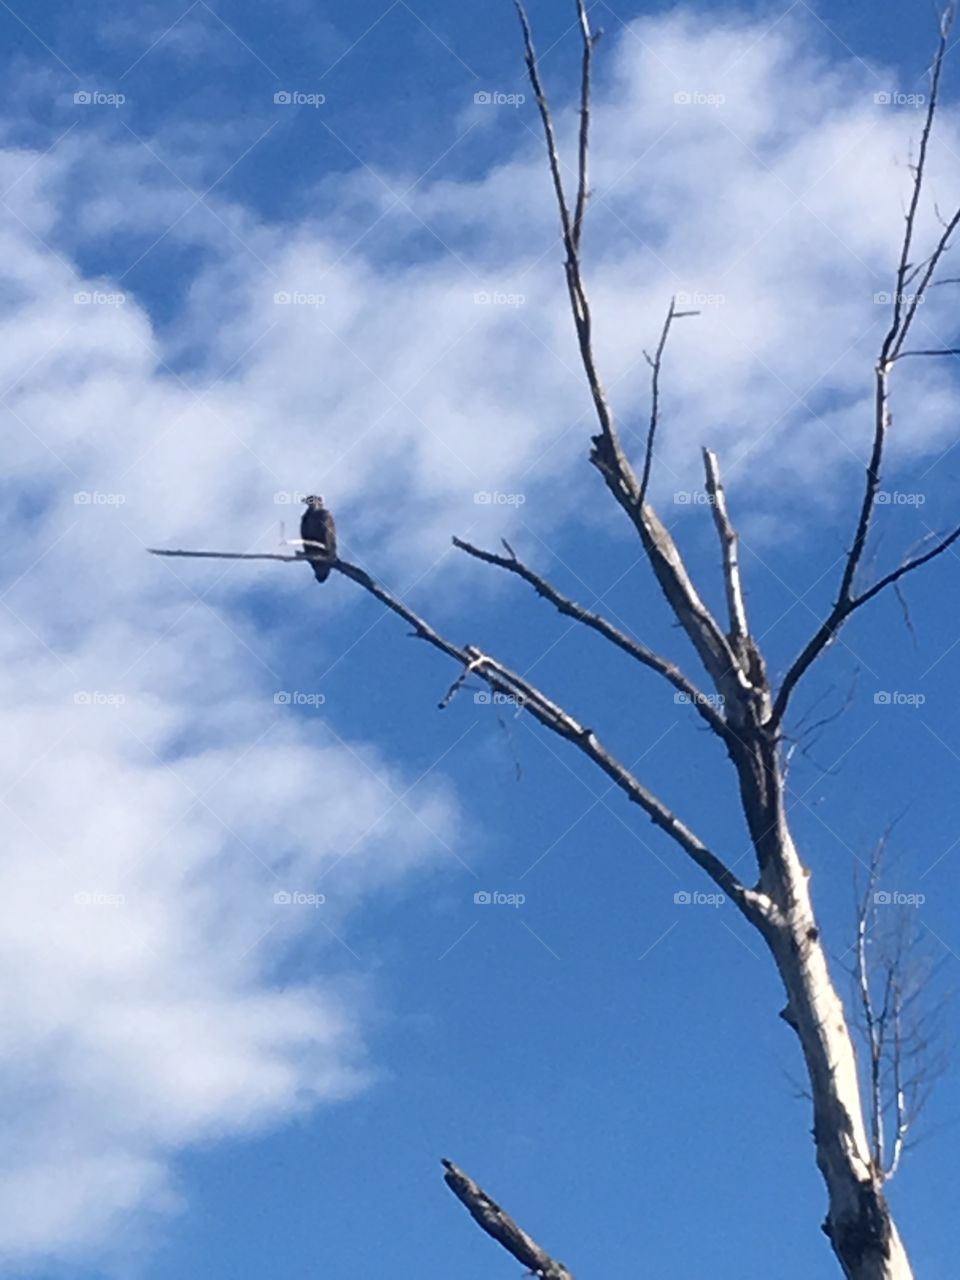 Eagle keeping watch